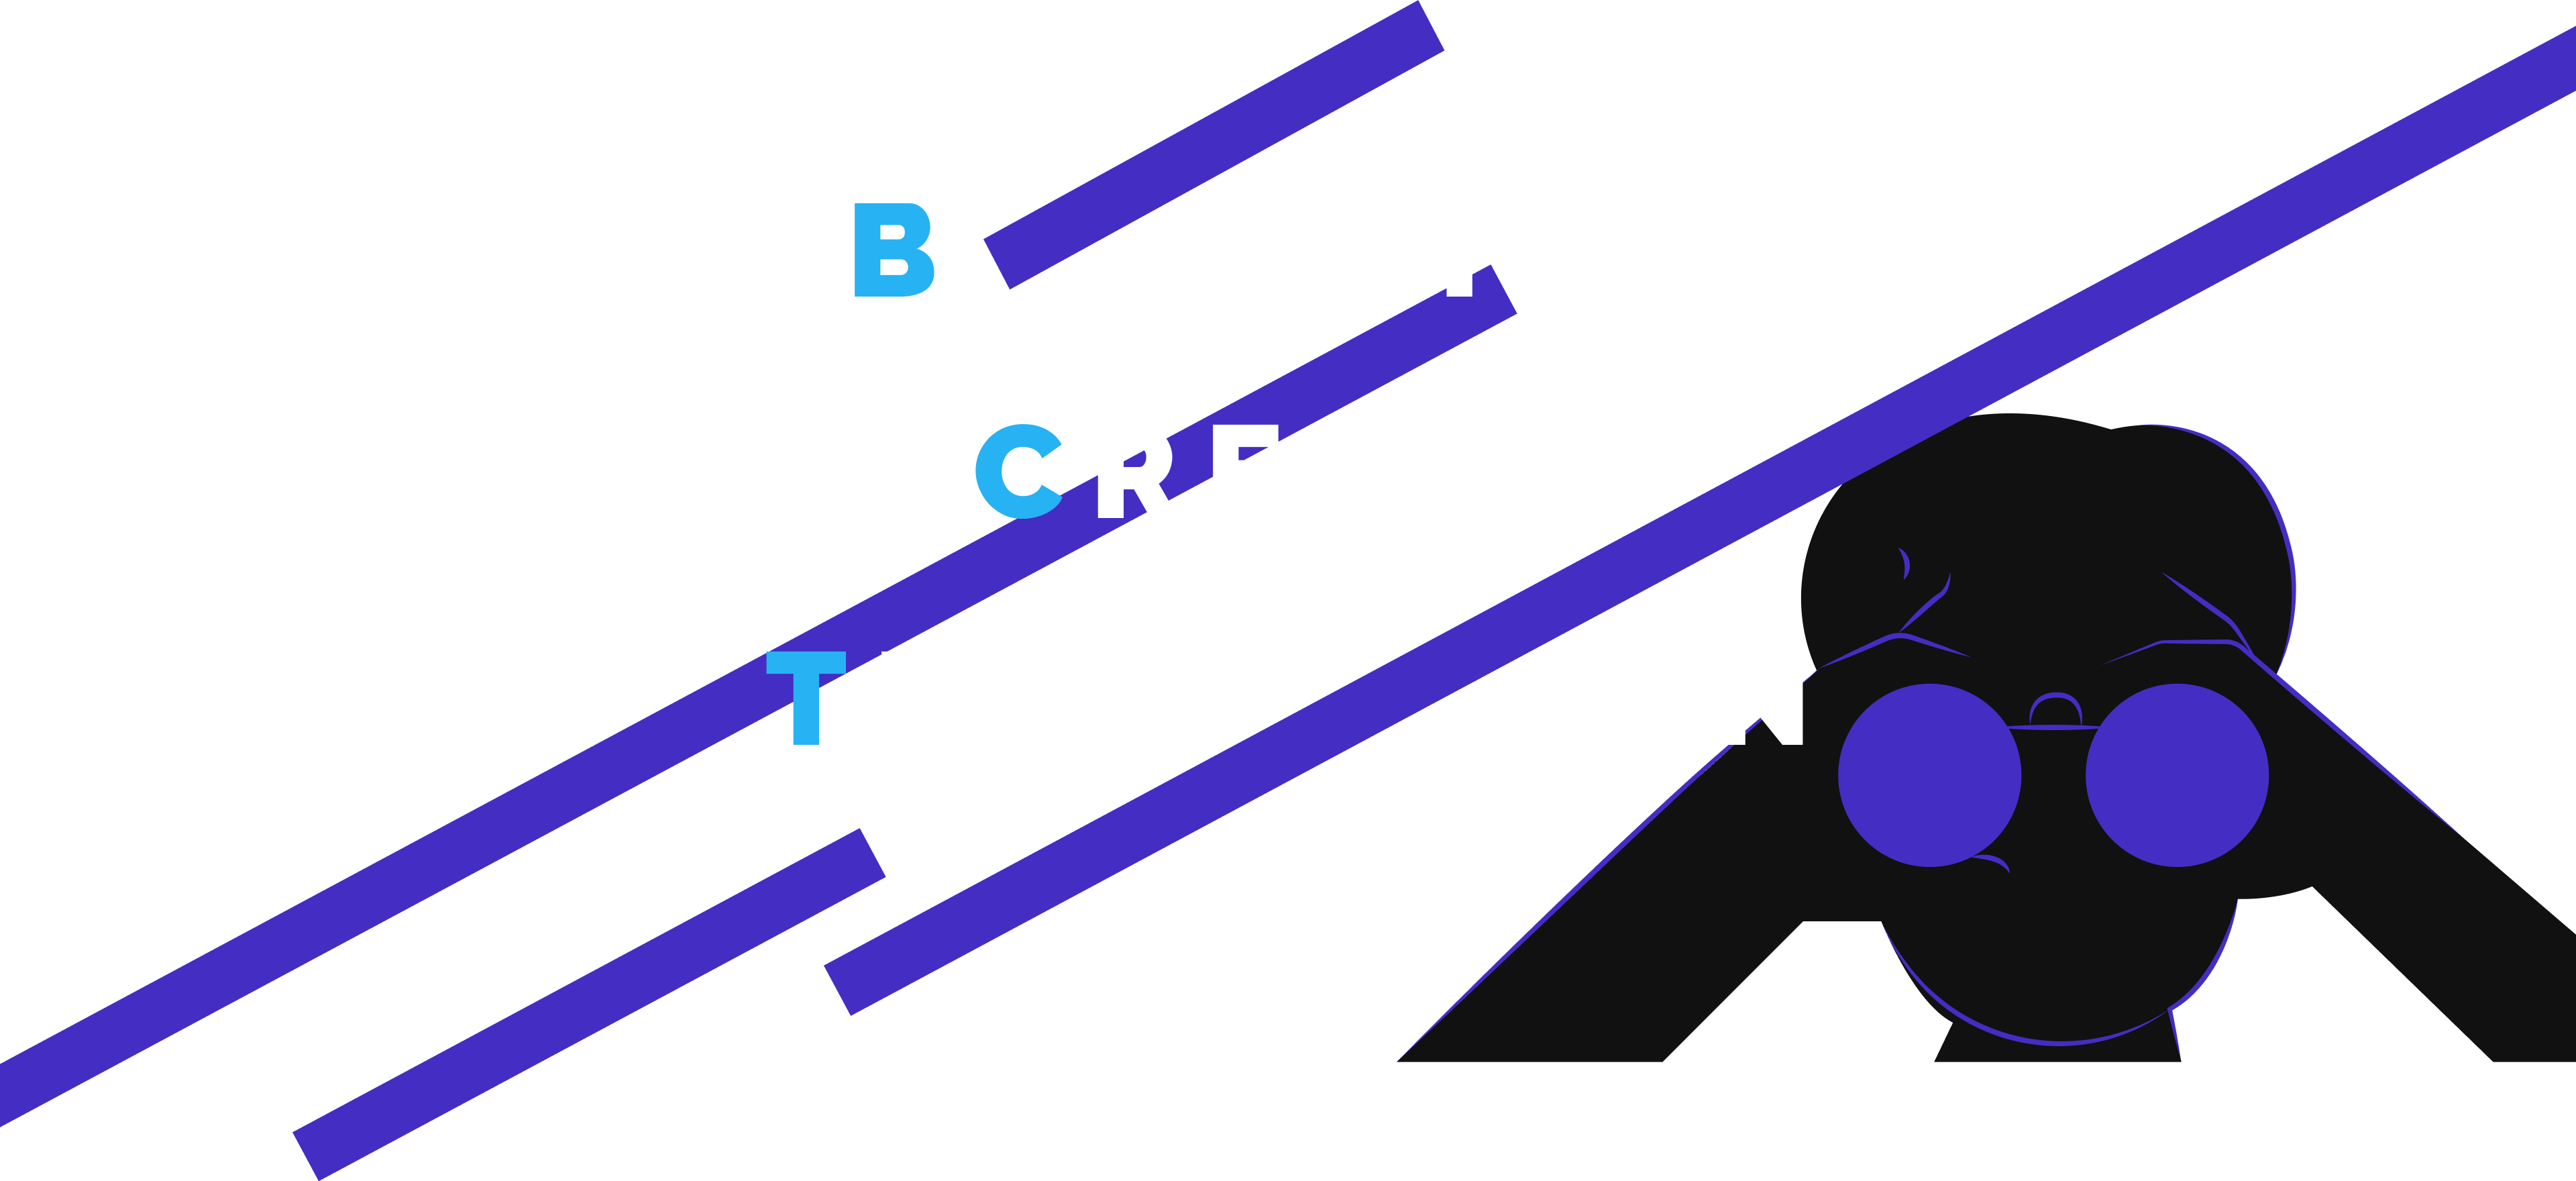 branding create technician